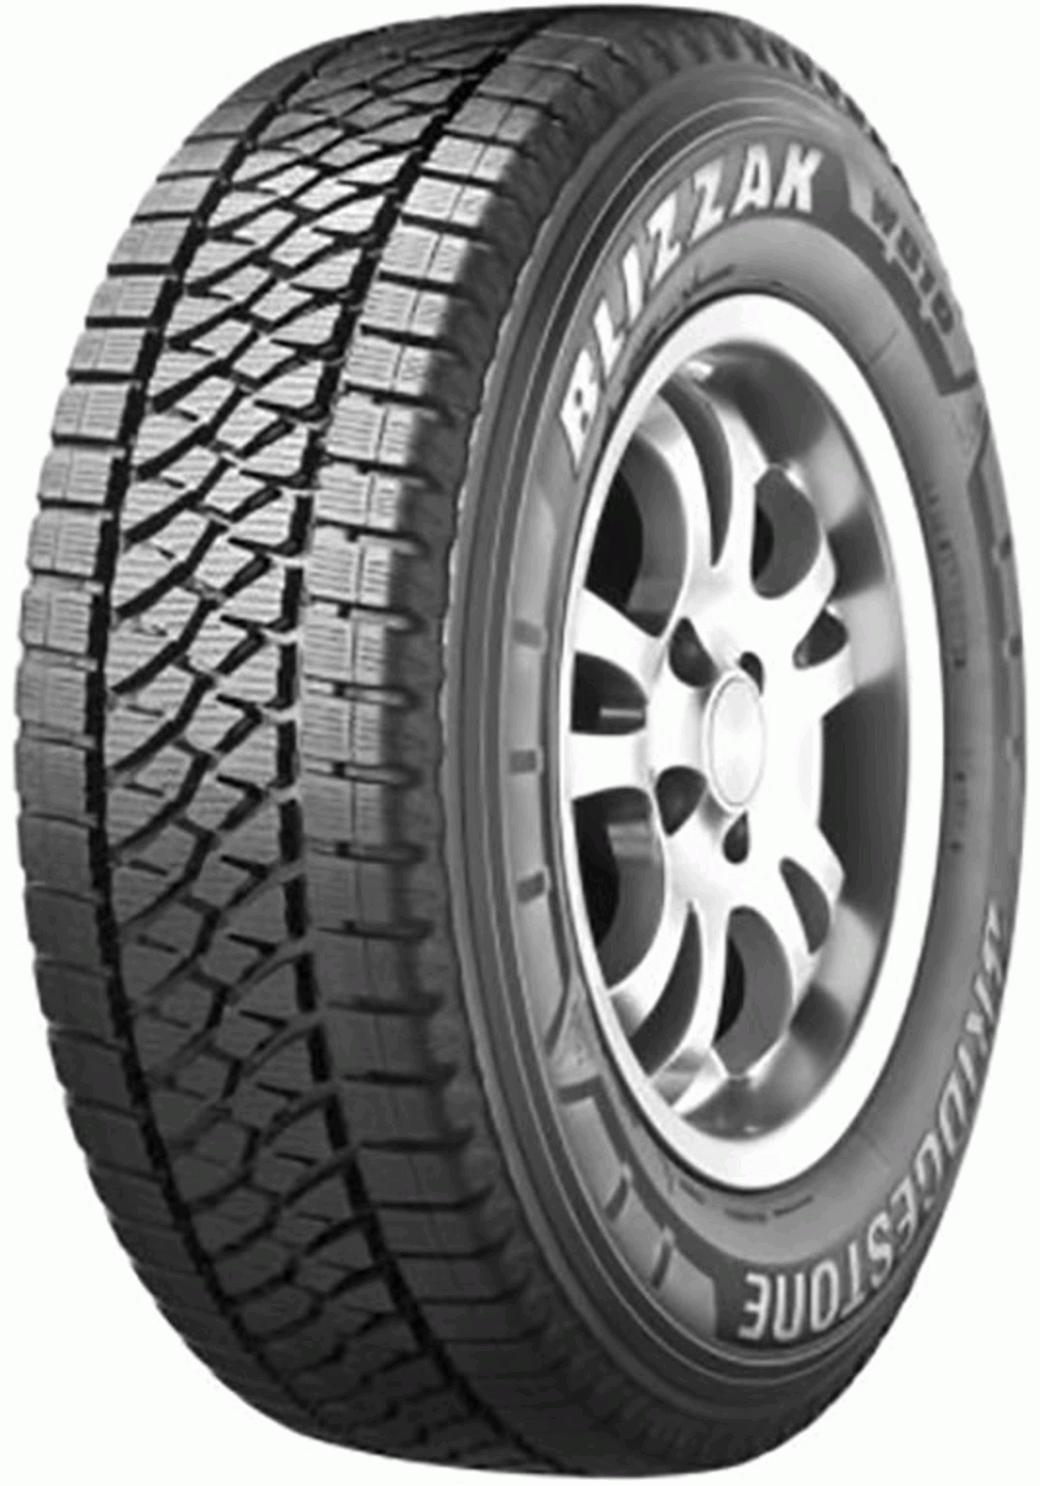 and Tests - Reviews Bridgestone Blizzak Tire W810